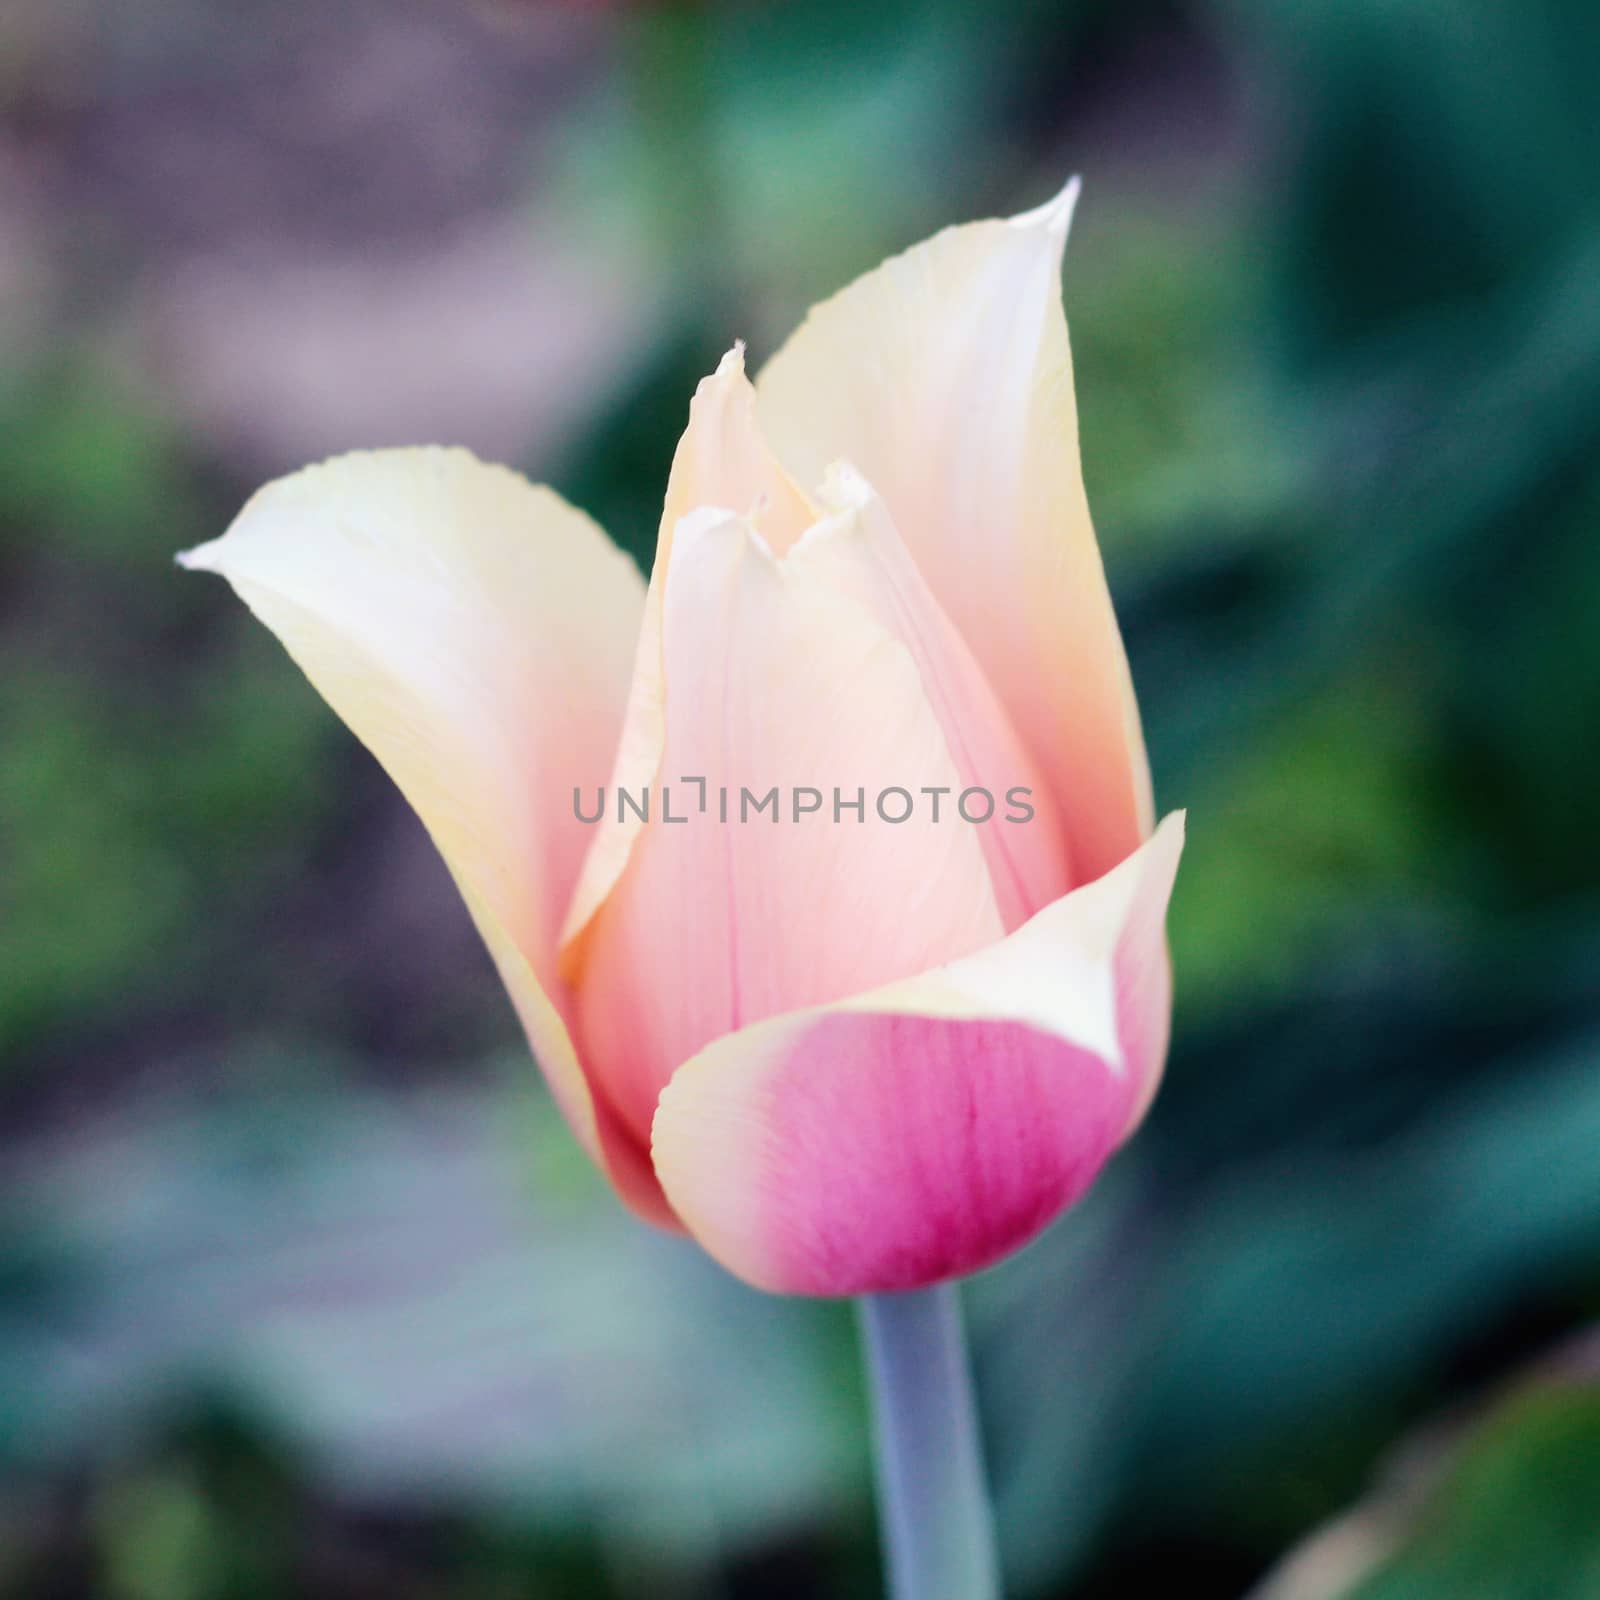 biautiful big yellow and pink tulip. photo. flowers spring